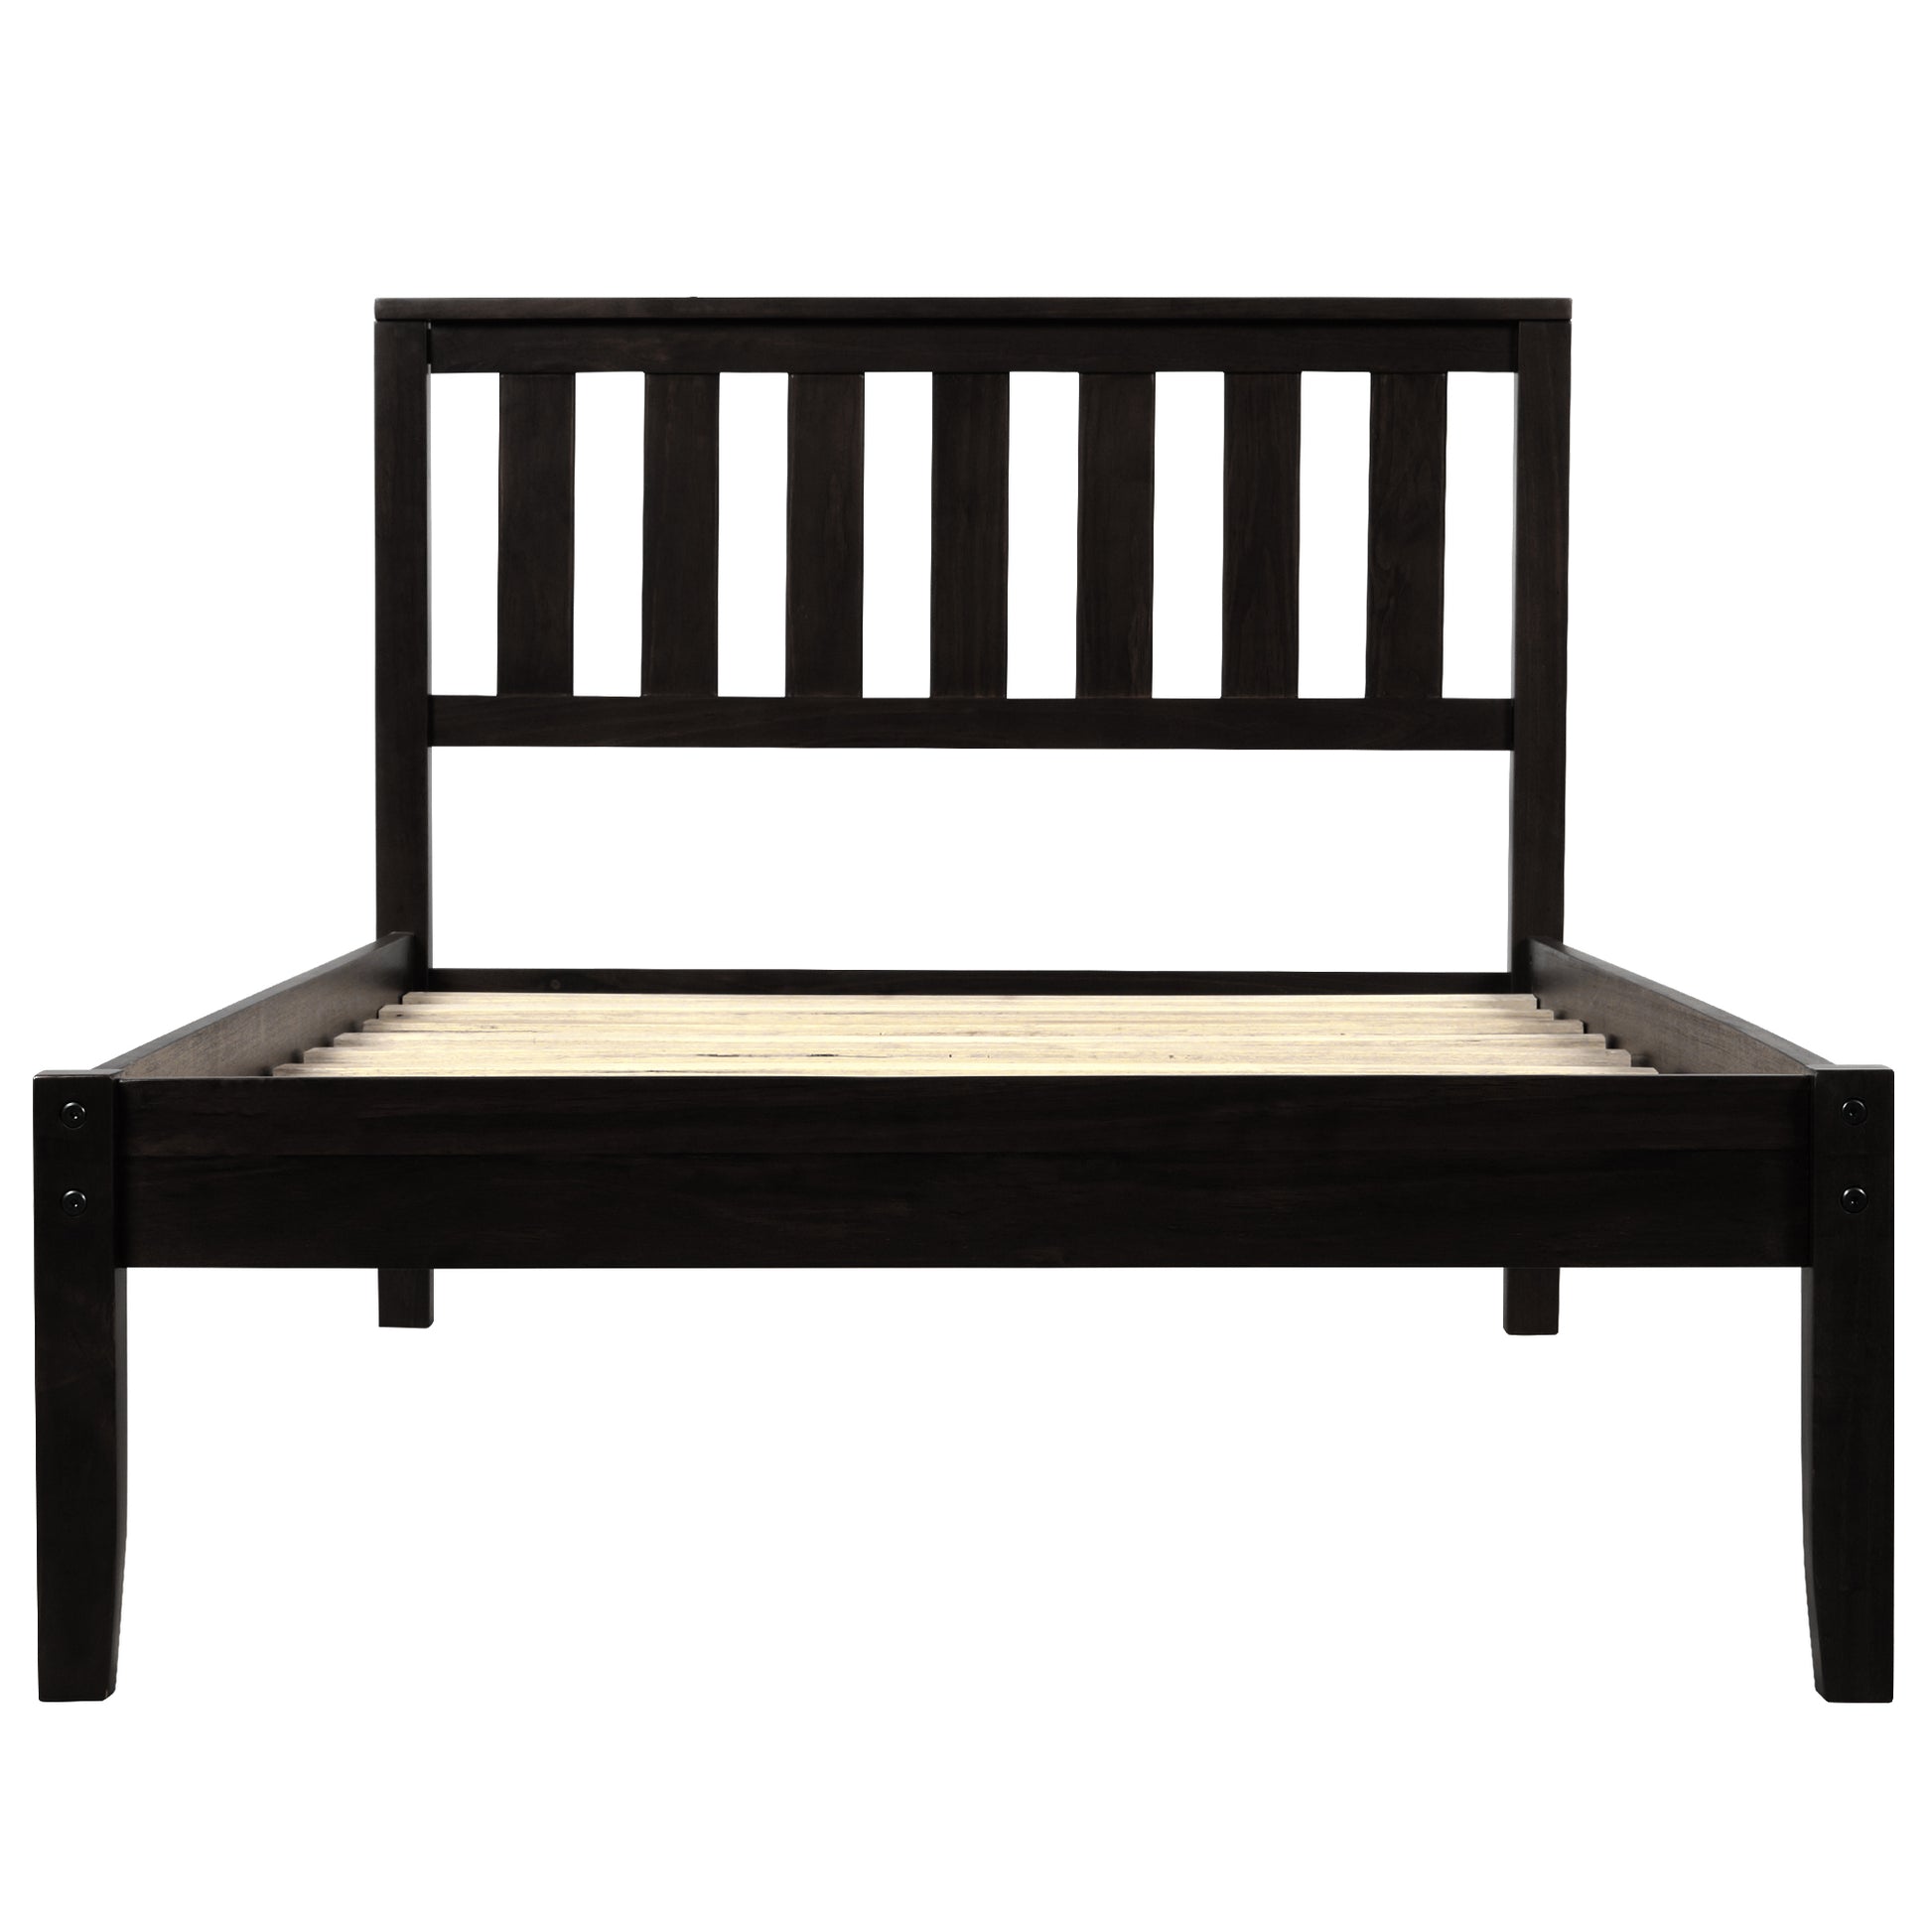 Wood Platform Bed with Headboard/Wood Slat Support,Twin Espresso